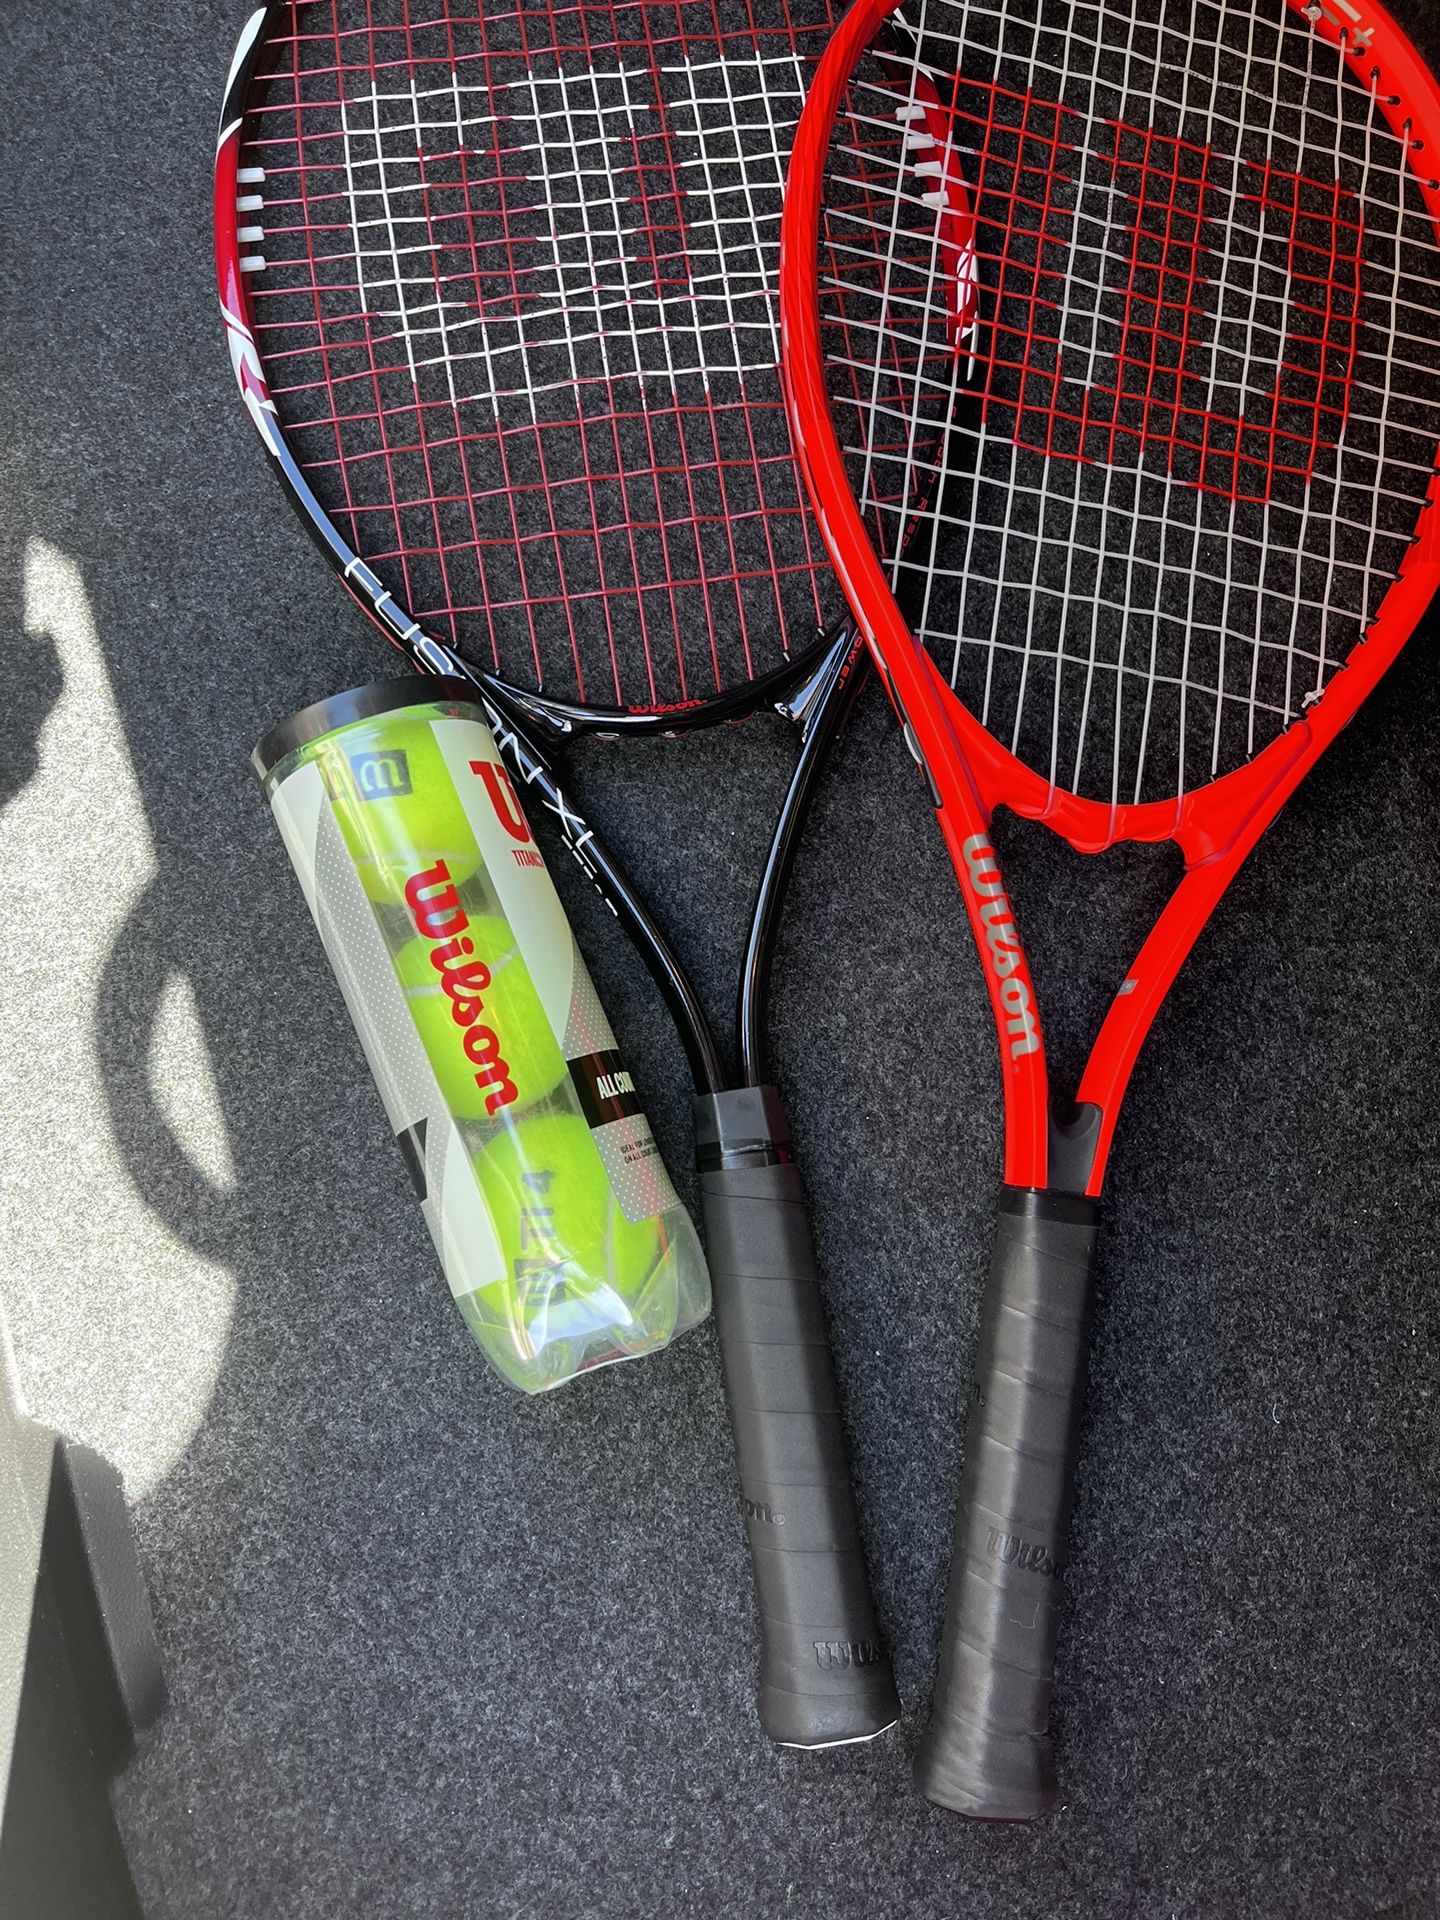 Tennis Racket And Tennis Balls